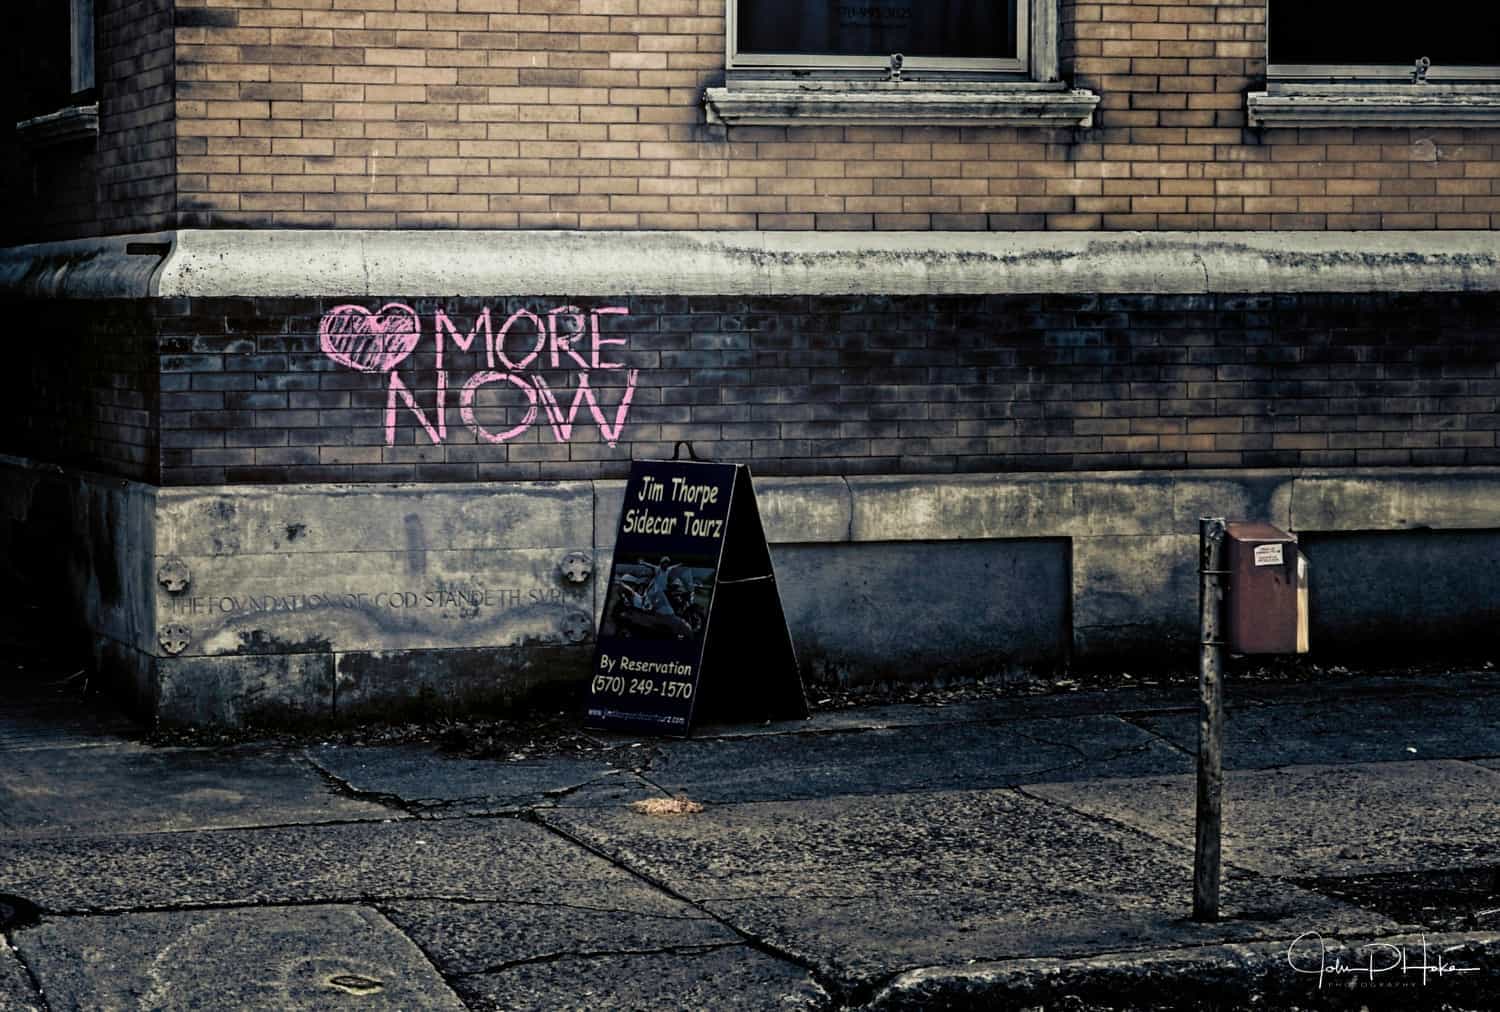 Love More Now! Jim Thorpe Street Graffiti